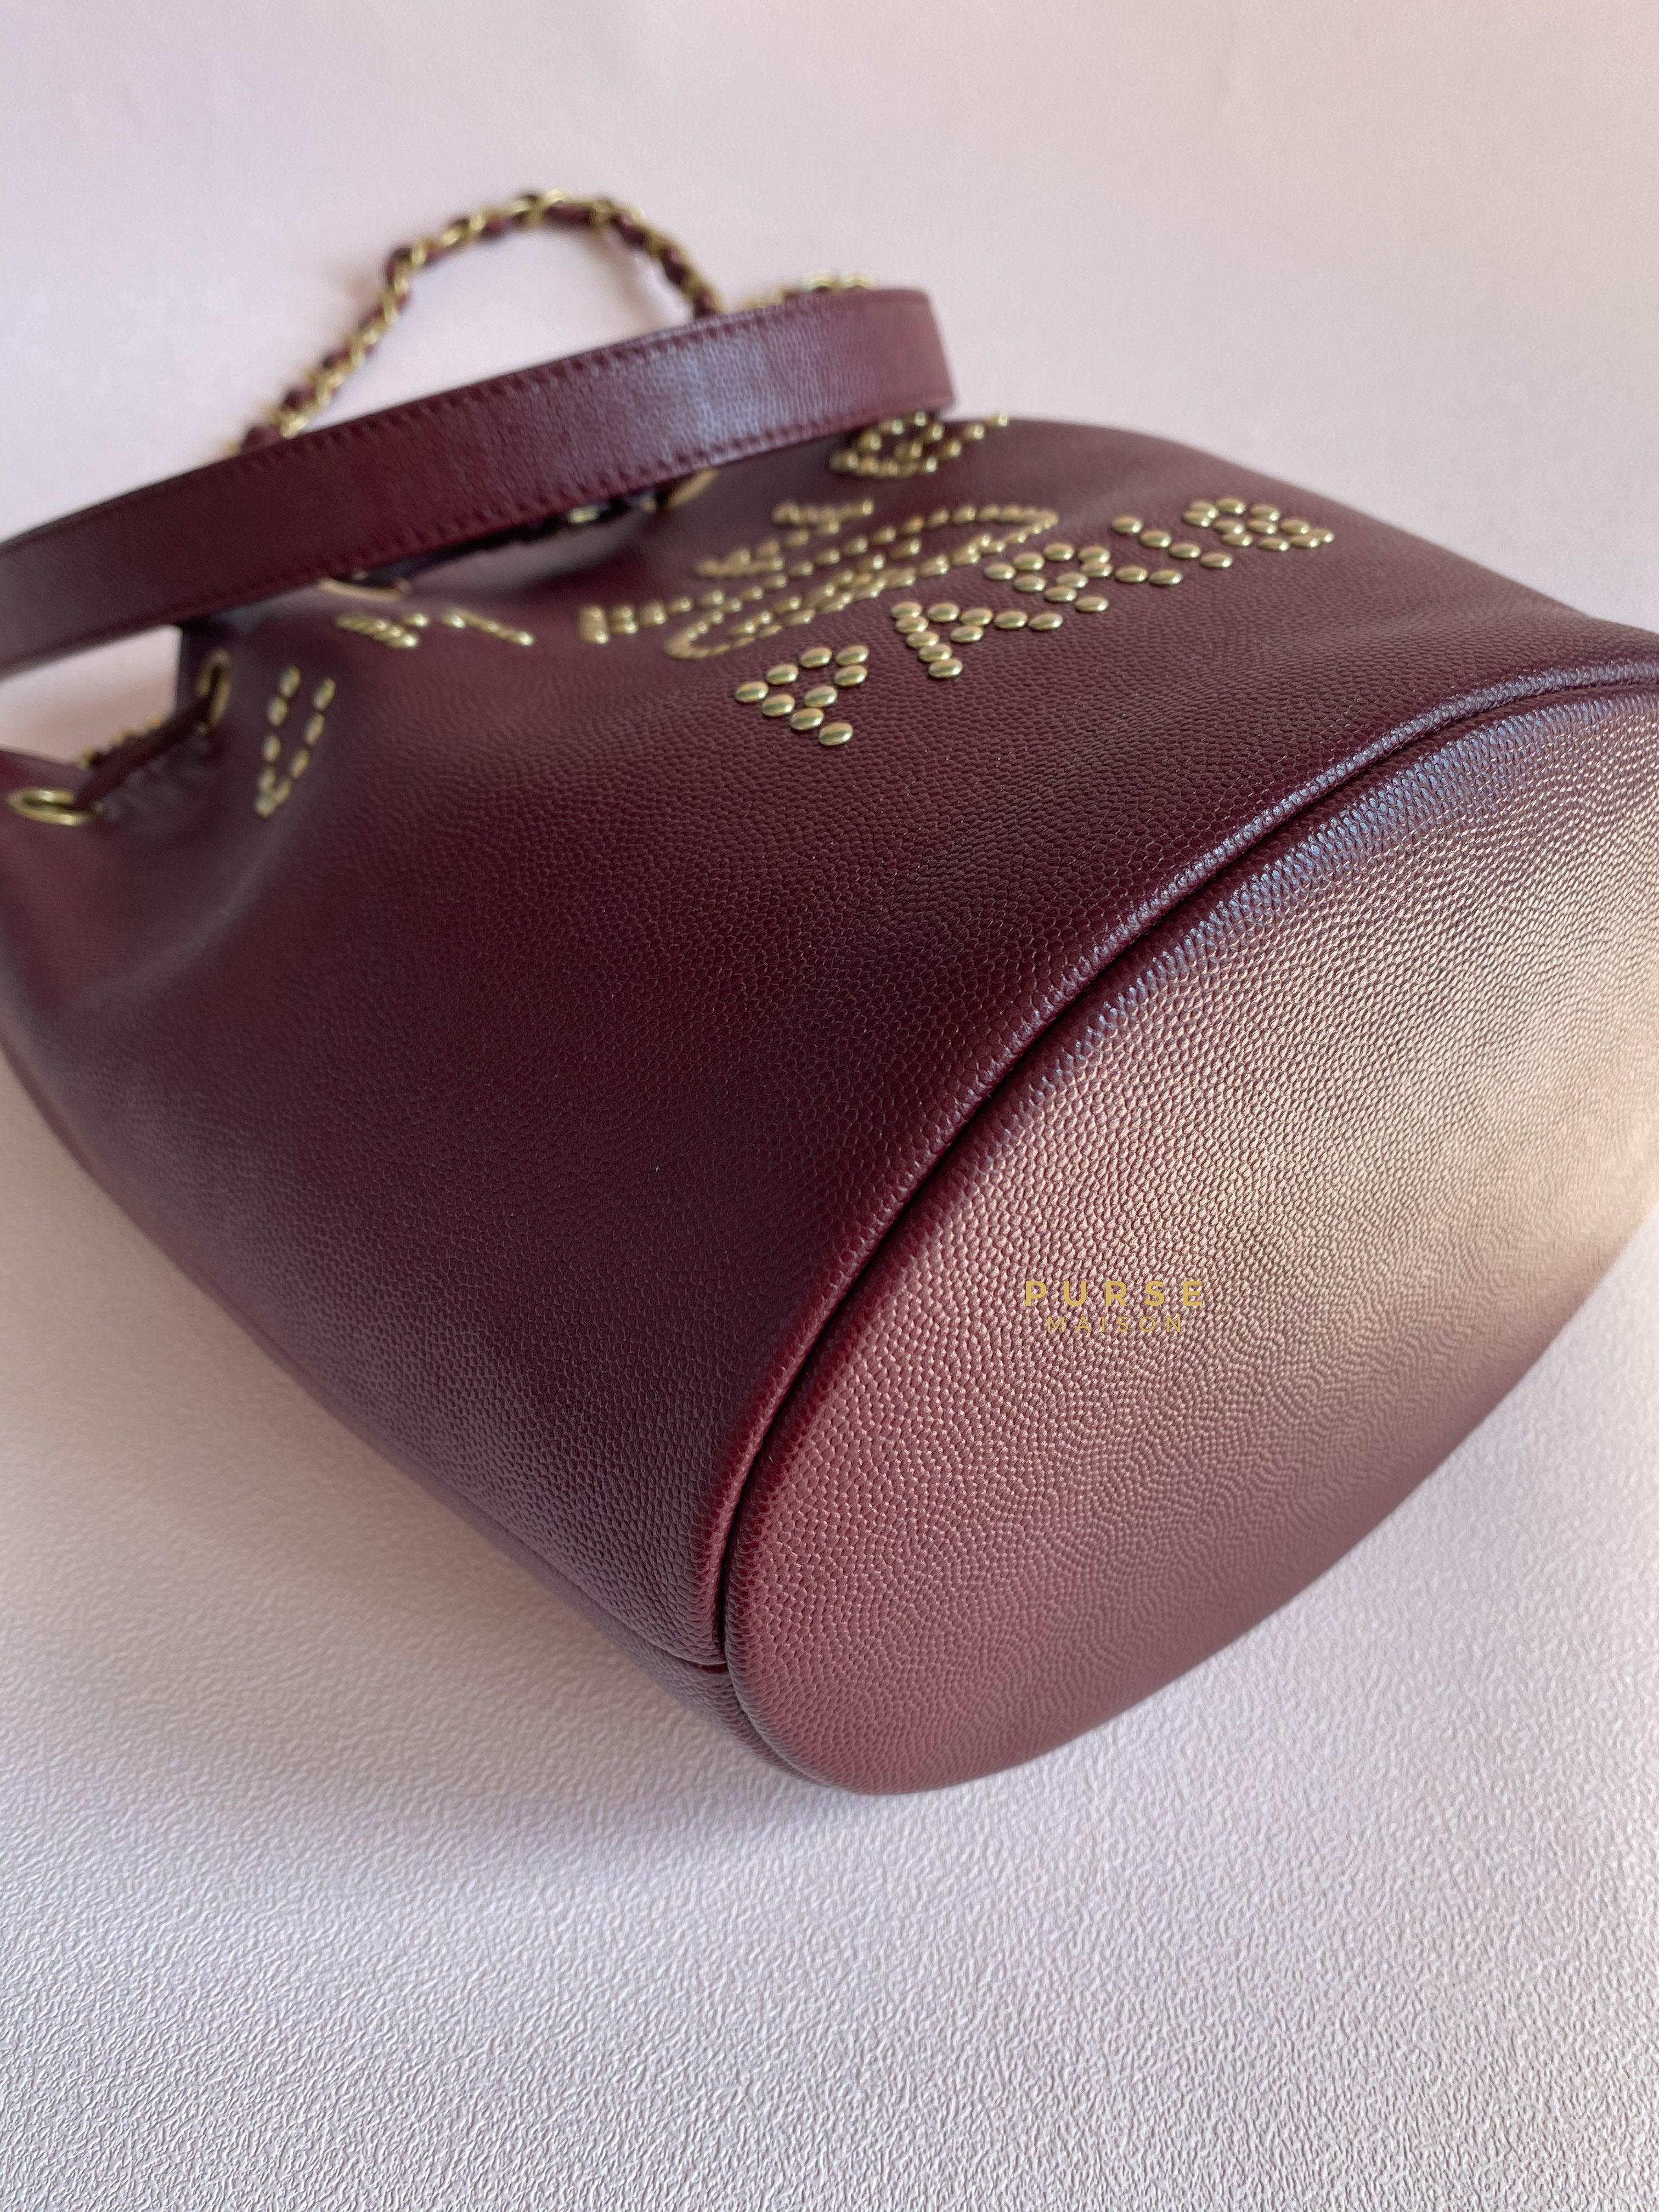 Chanel Deauville Drawstring Bucket Bag Medium Caviar Burgundy in Aged Gold Hardware Series 28 | Purse Maison Luxury Bags Shop